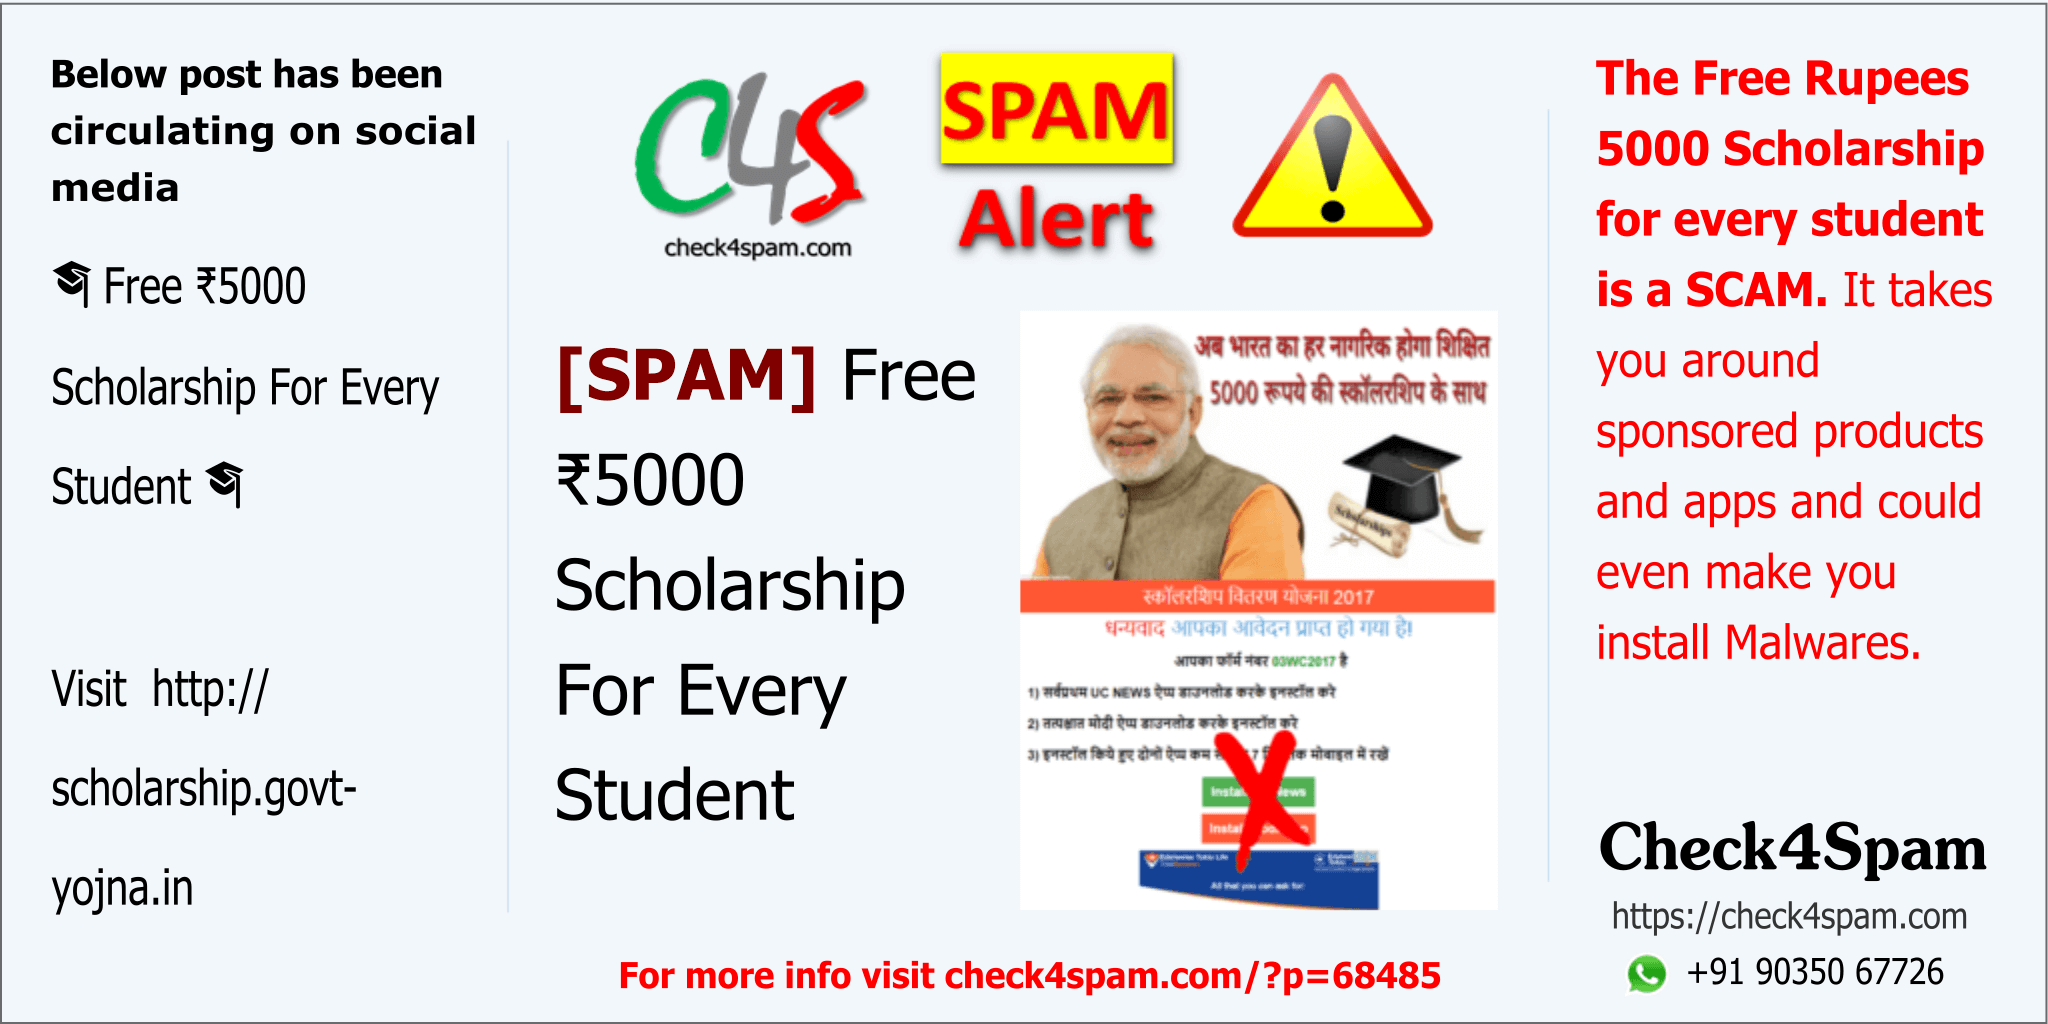 scholarship govt yojna free rupees 5000 for every student - SPAM